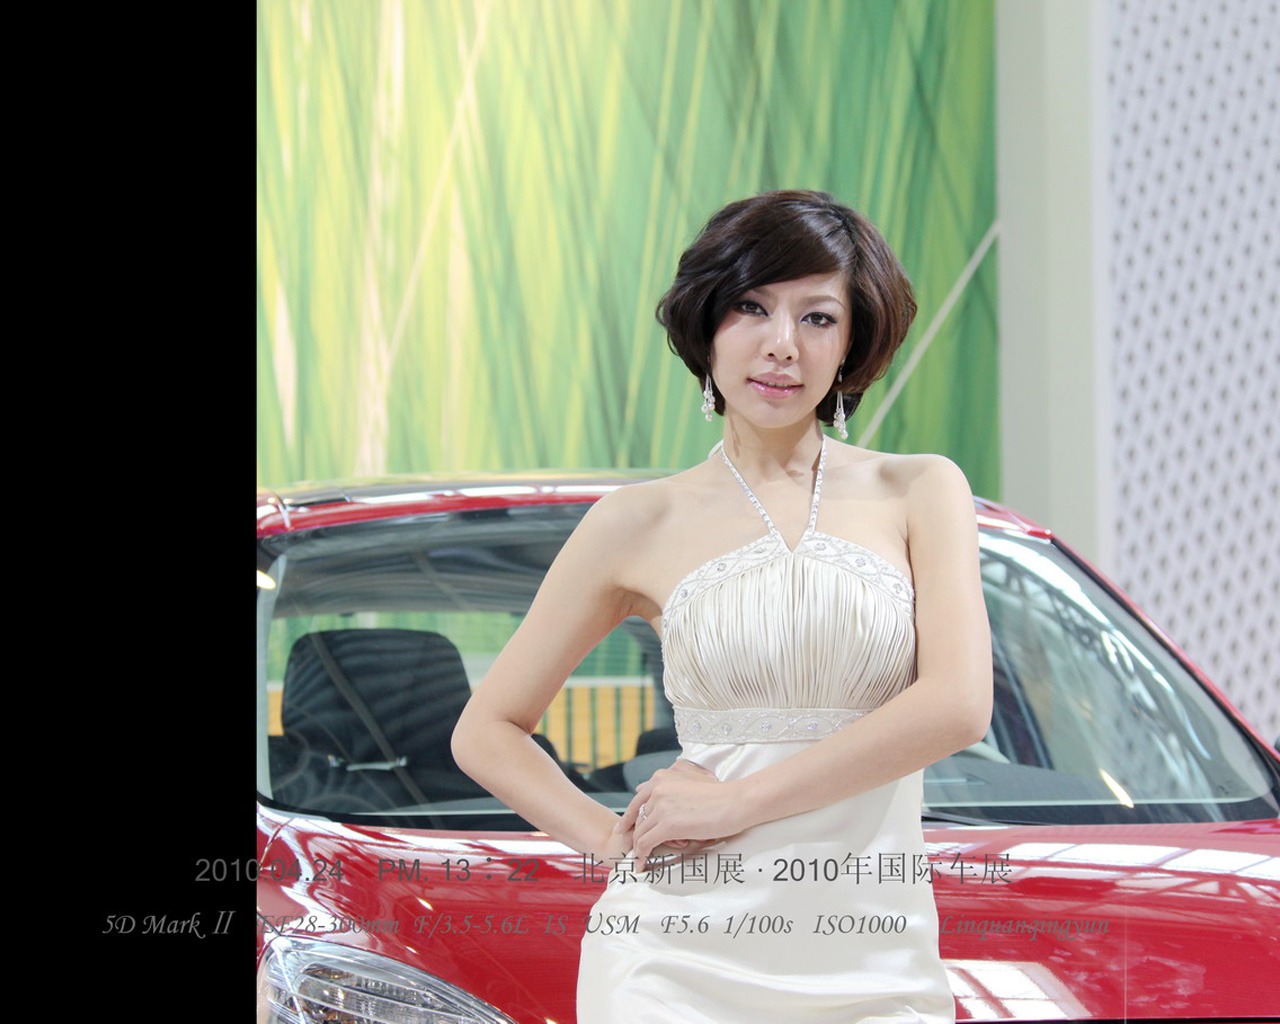 2010-4-24 Beijing International Auto Show (Linquan Qing Yun works) #6 - 1280x1024